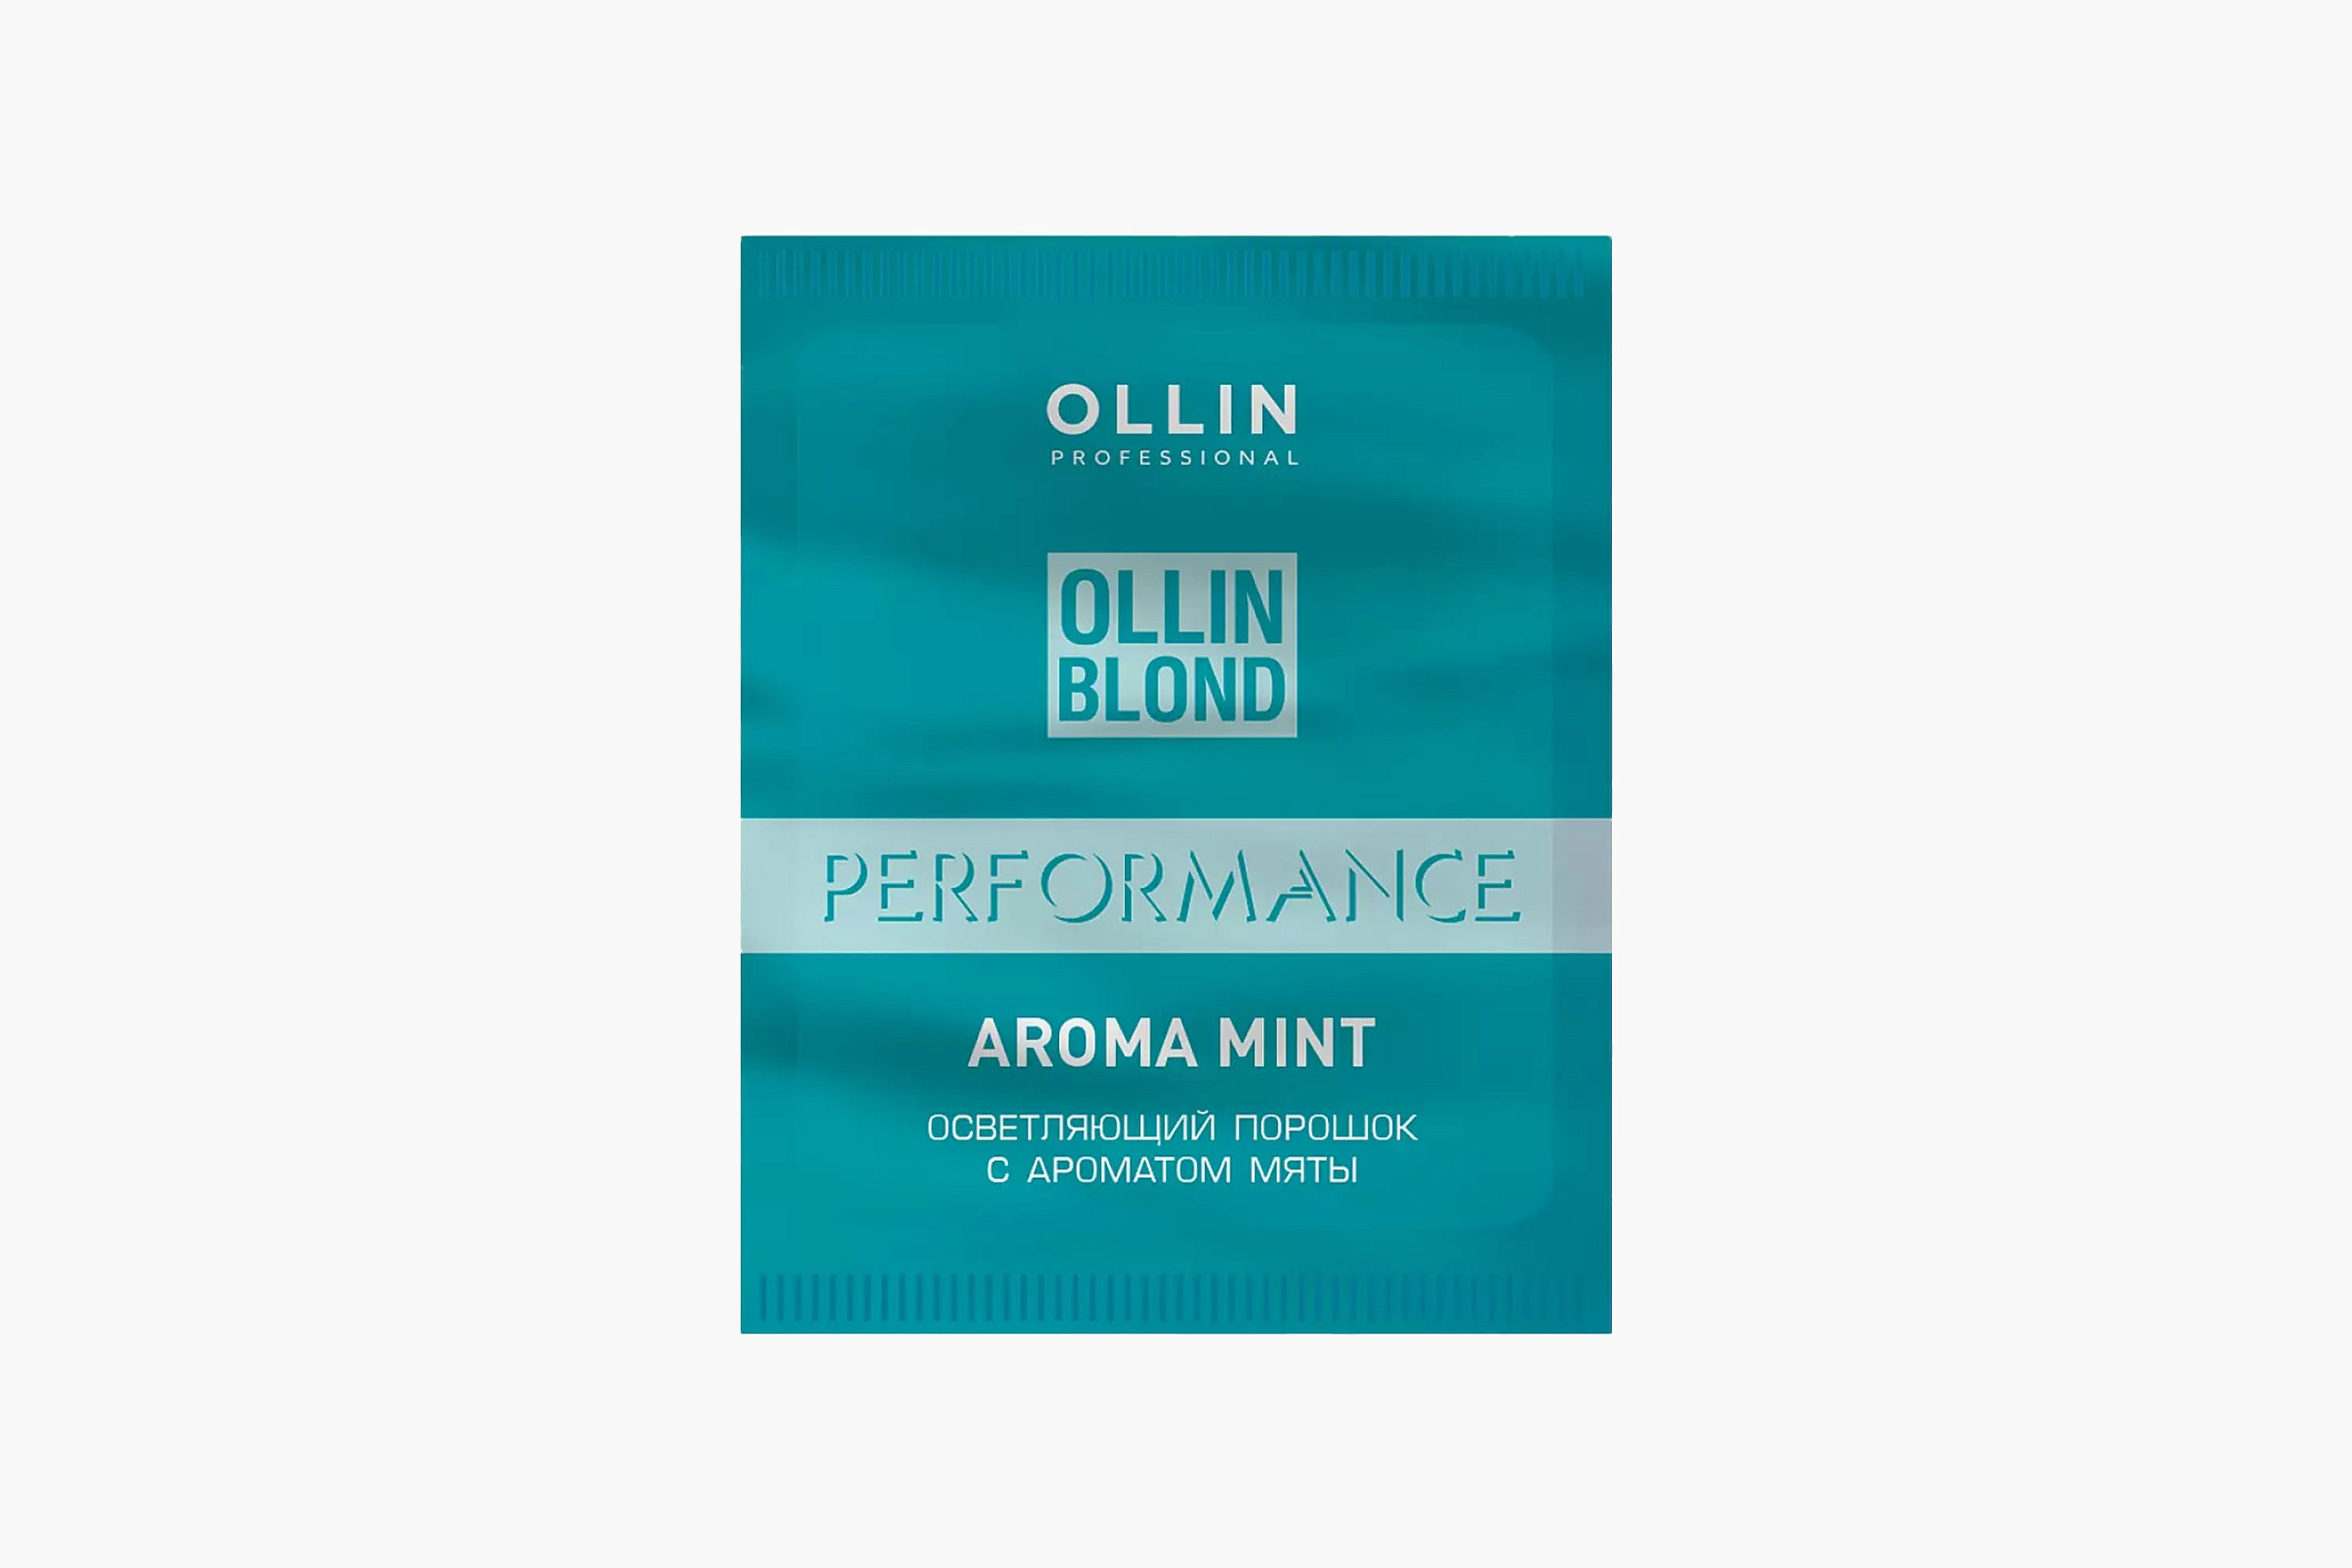 Ollin Professional Blond Perfomance Aroma Mint фото 1